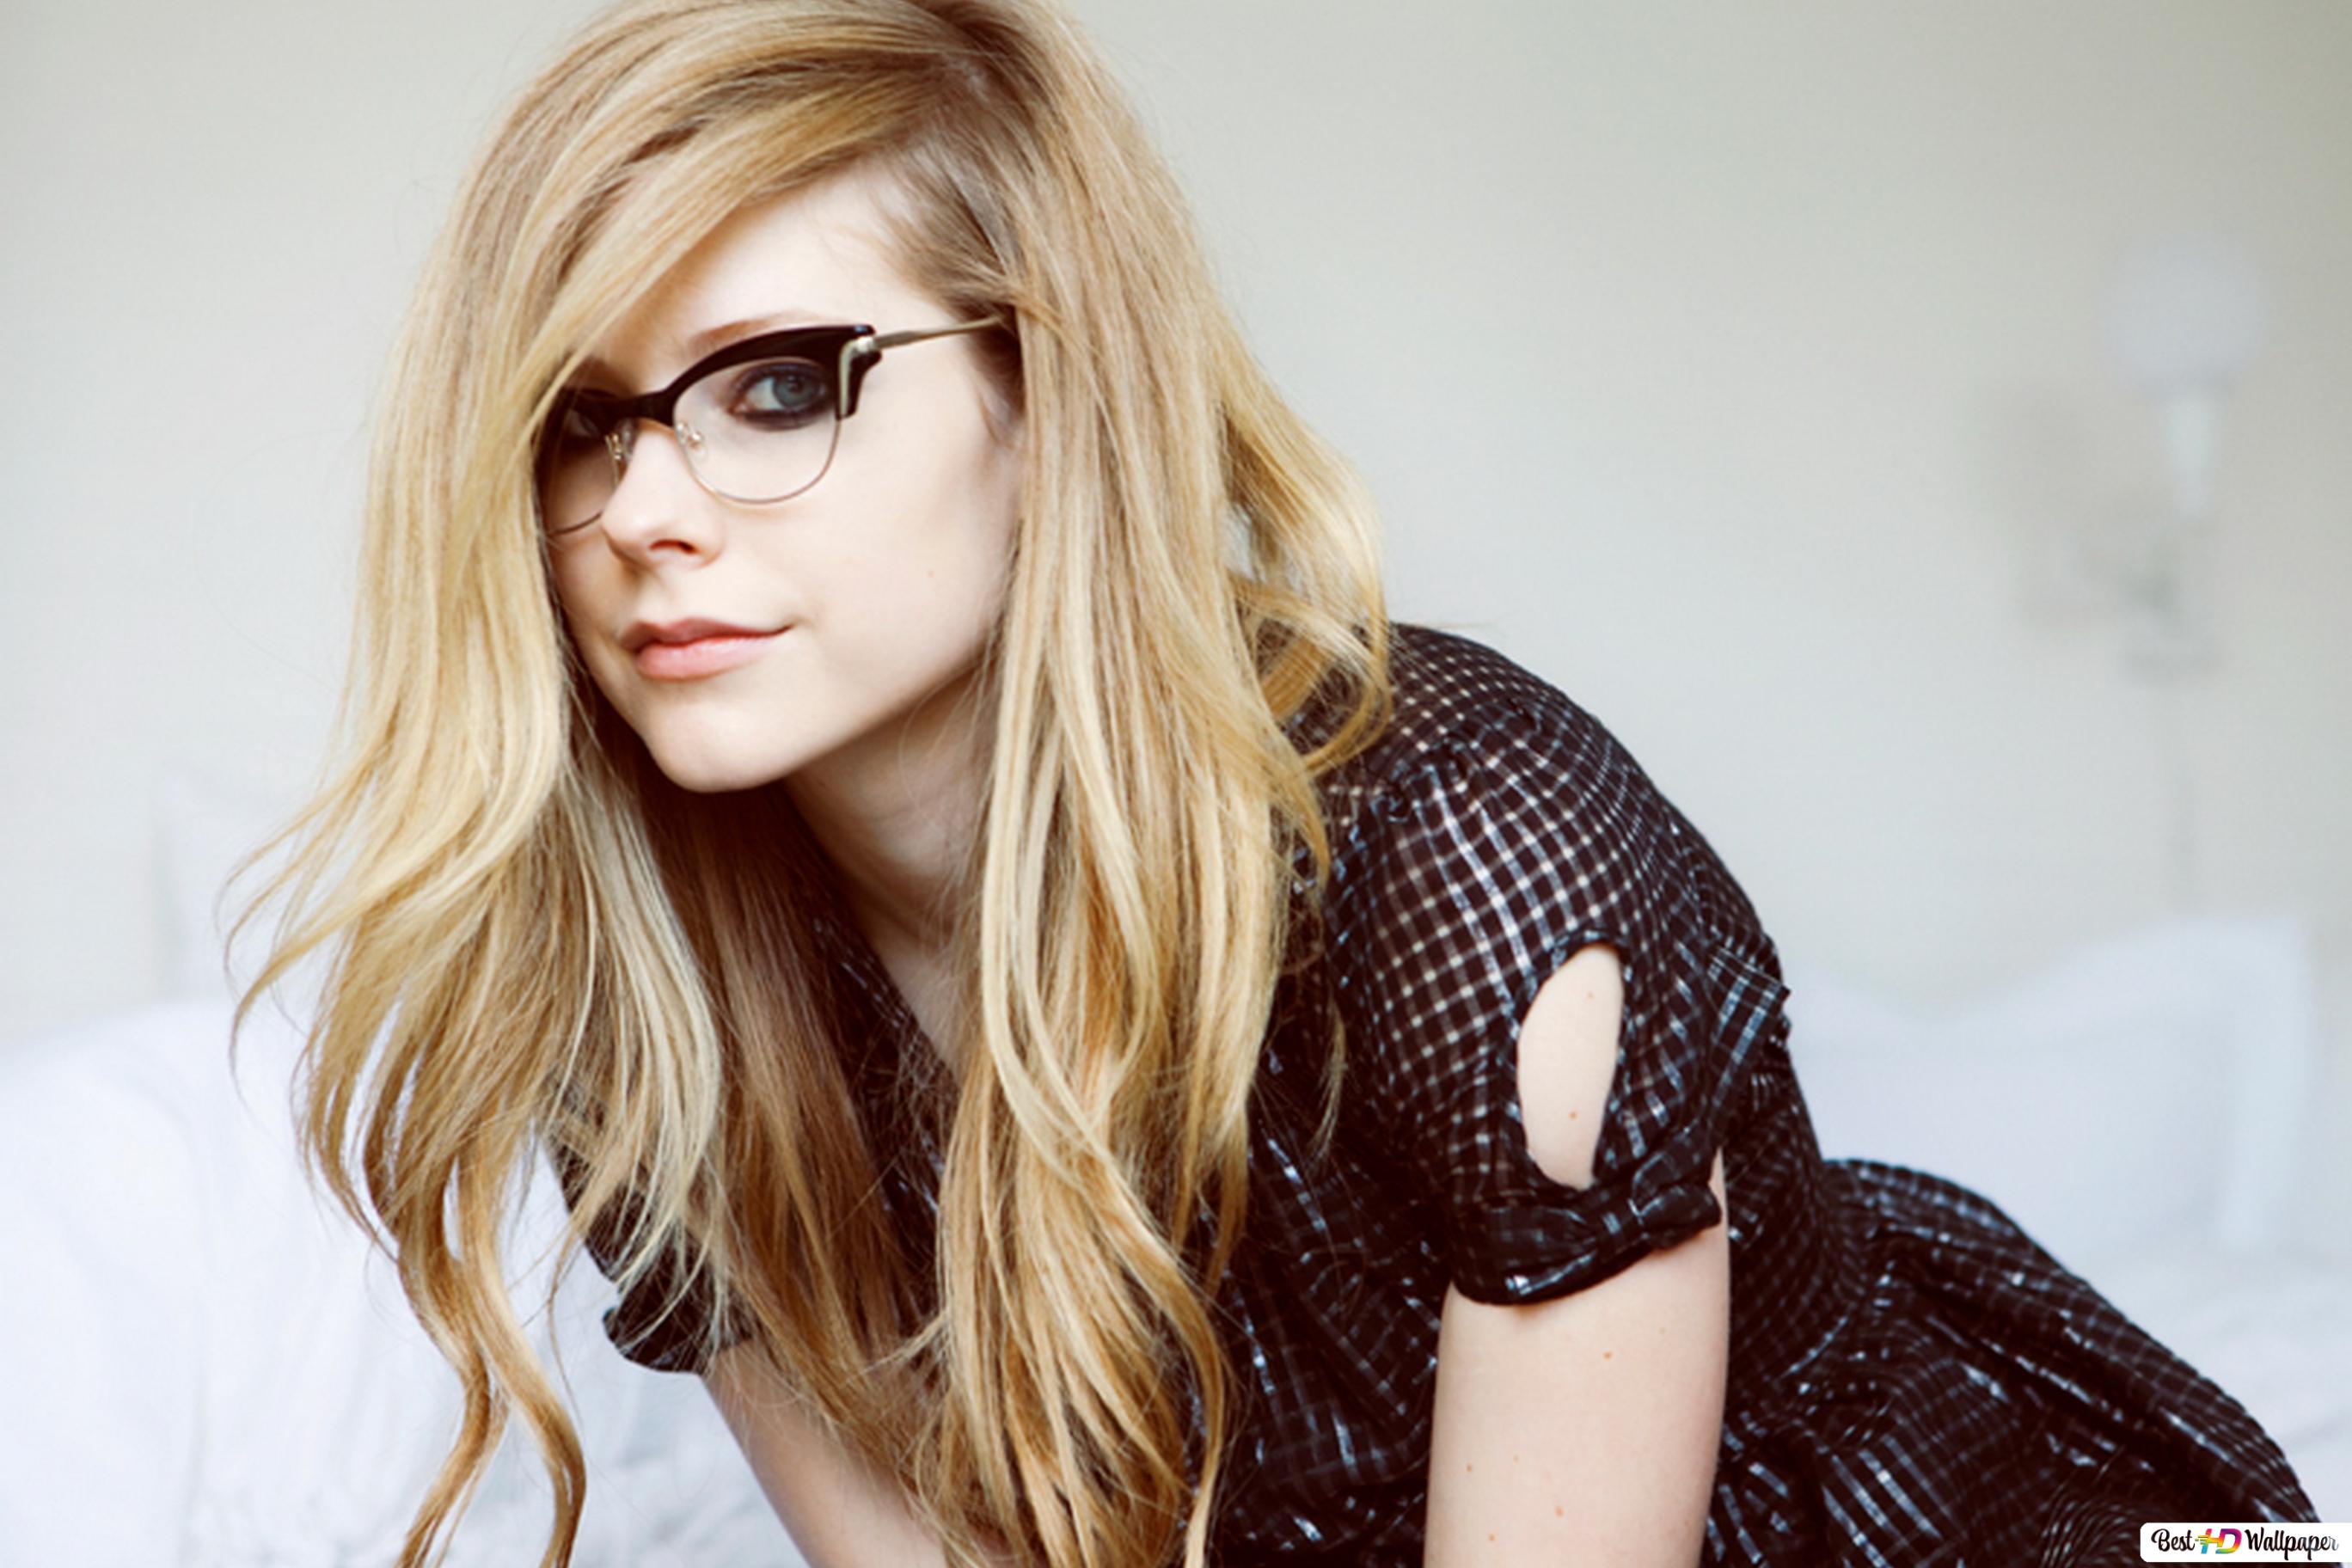 Cute Avril Lavinge in Sunglasses Wallpapers